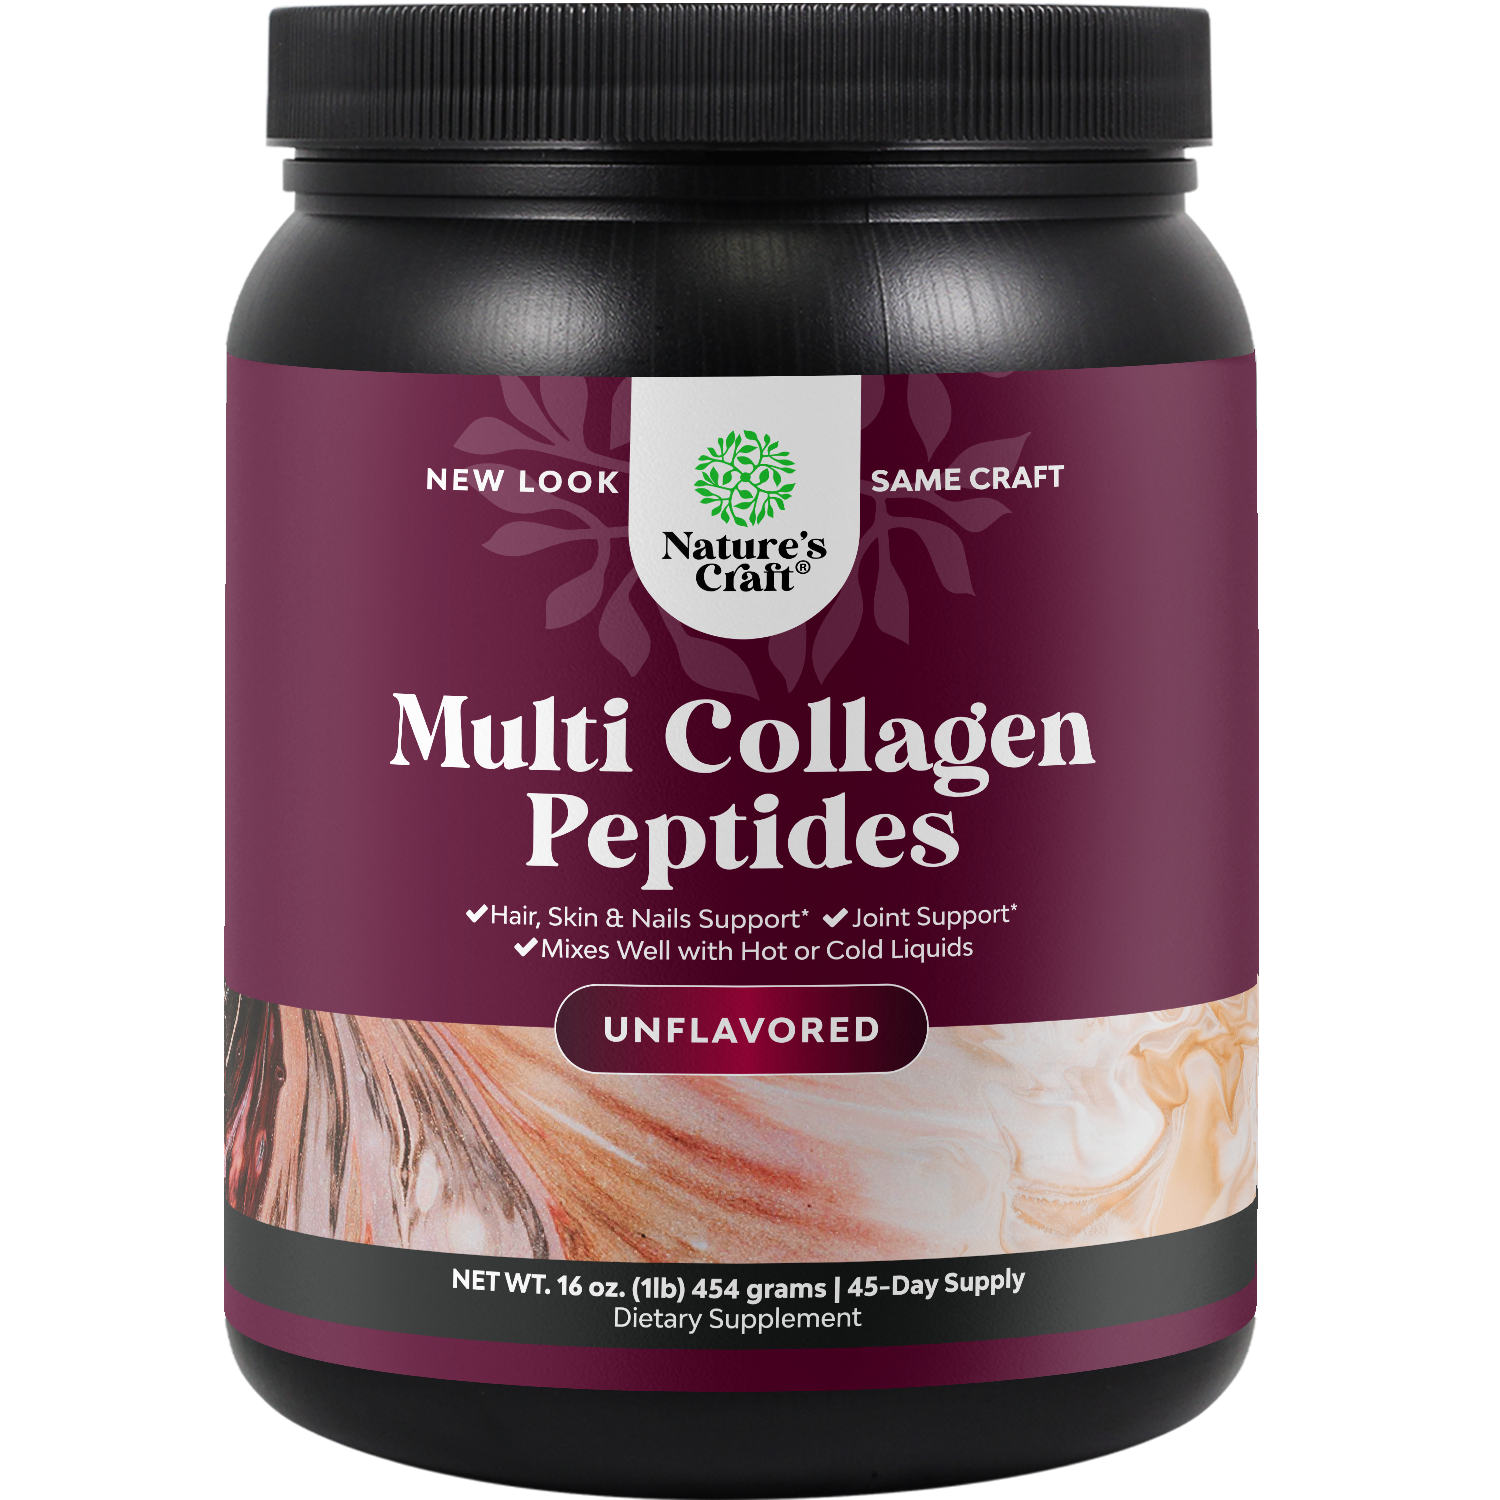 Multi Collagen Peptides - Powder